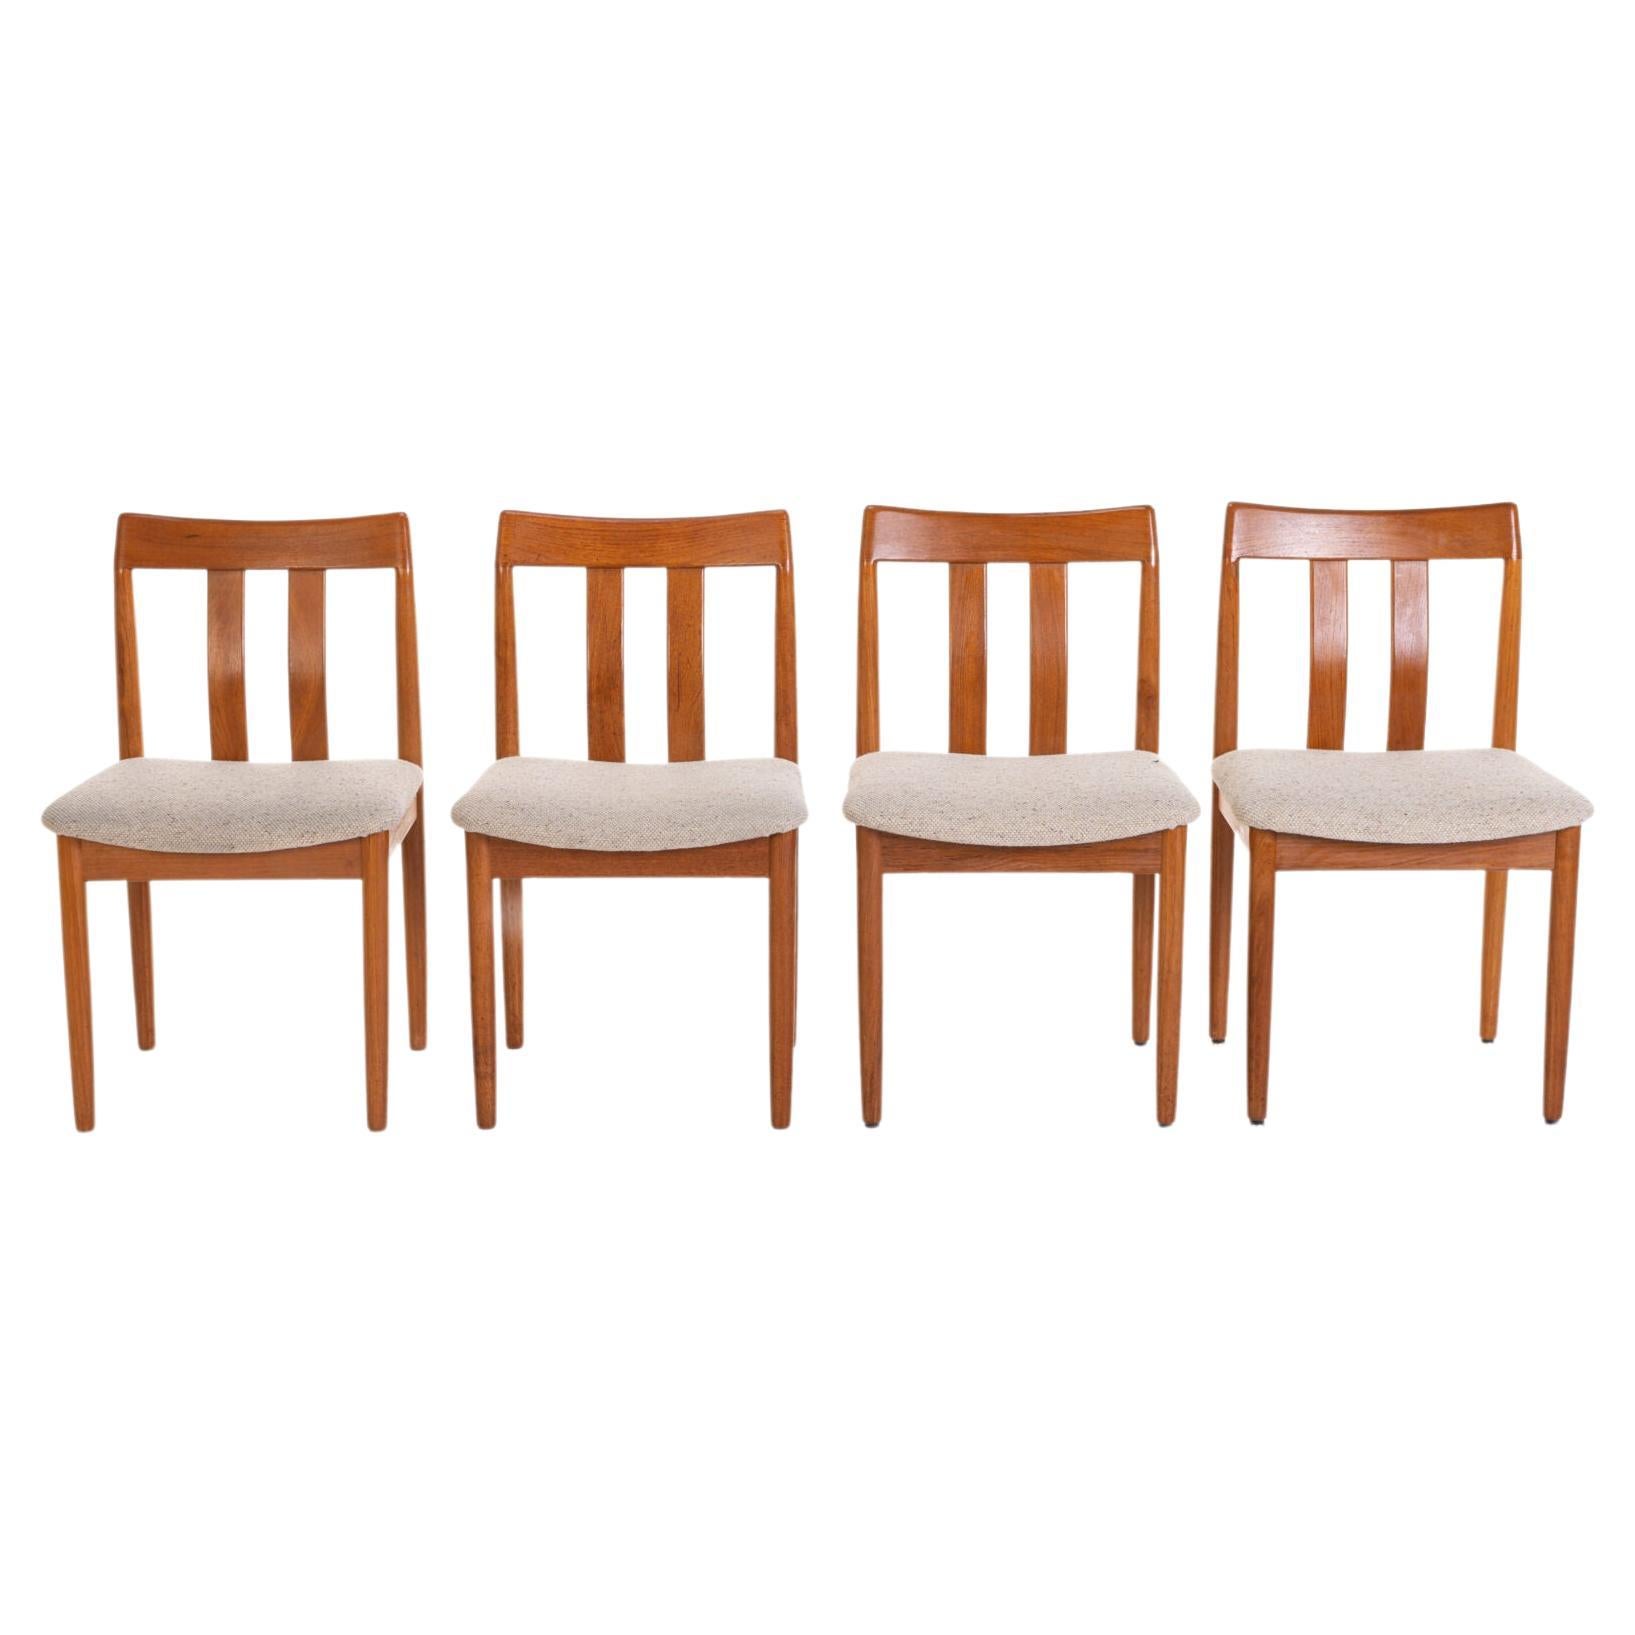 Set of 4 Teak Dining Room Chairs by Vamdrup, Denmark 1960s